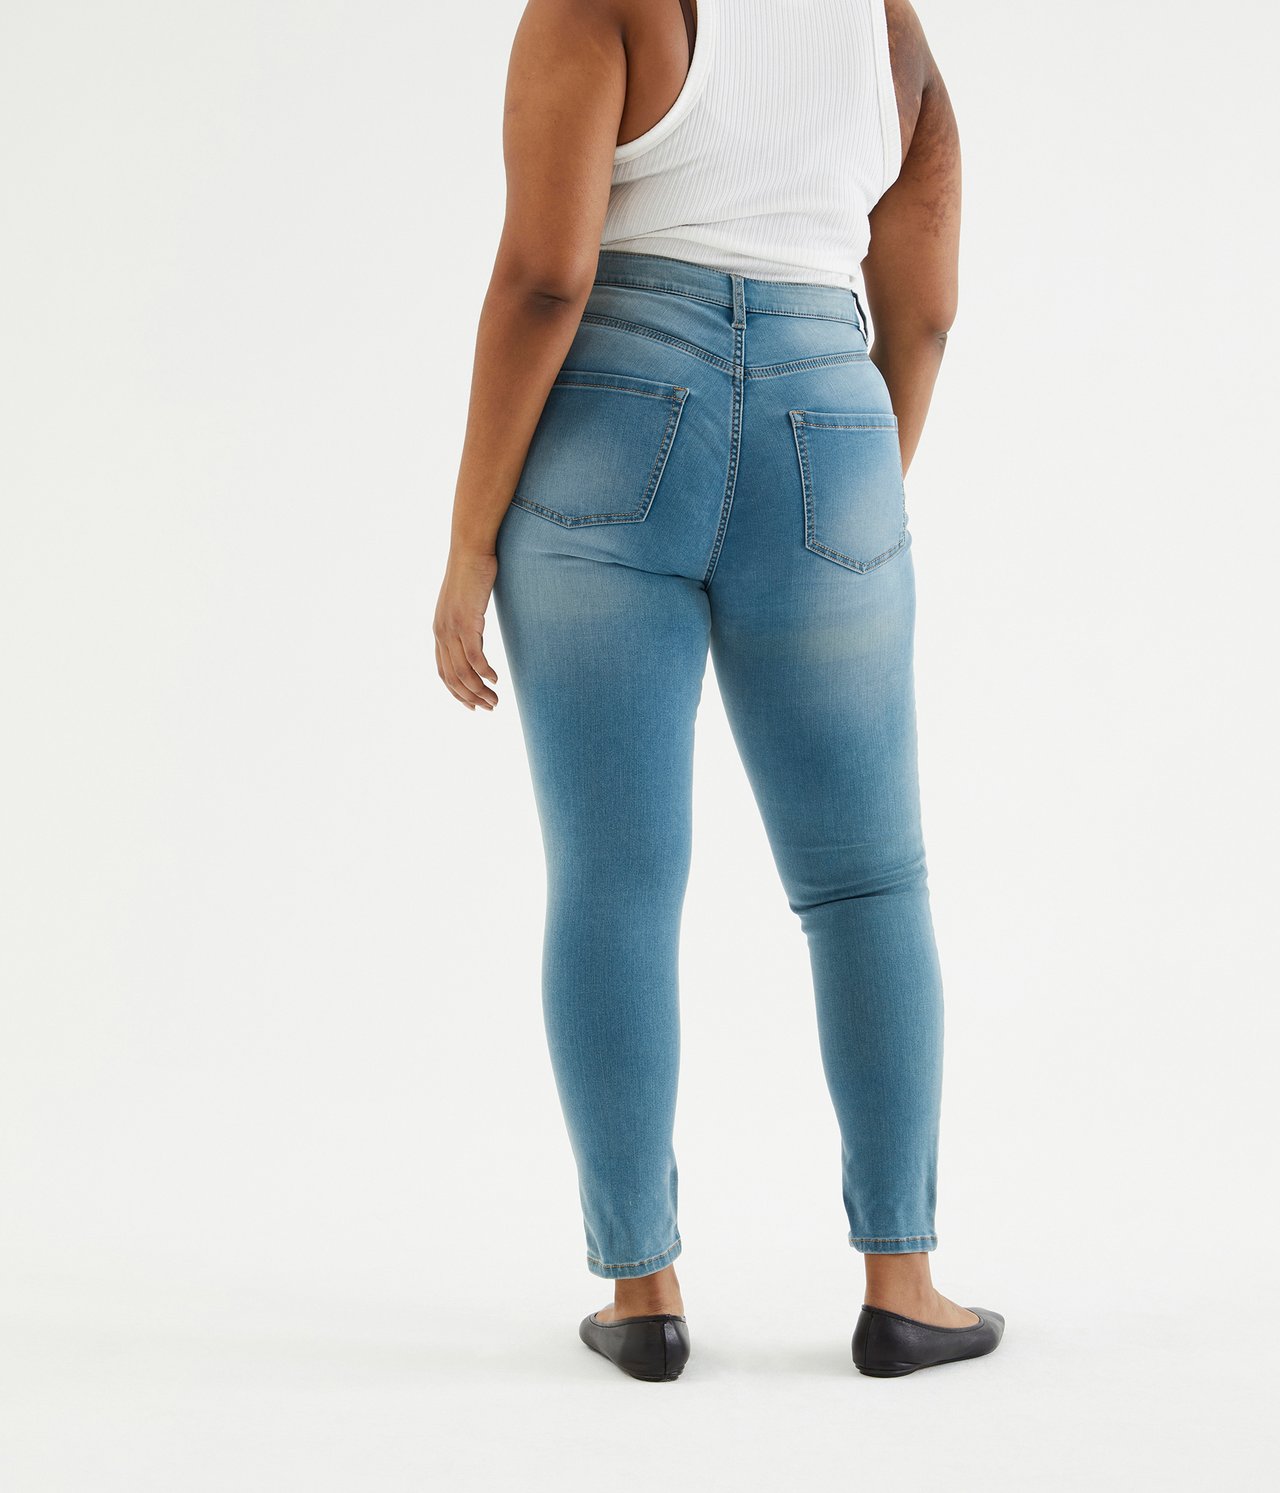 Super slim jeans short leg - Denimi - 6